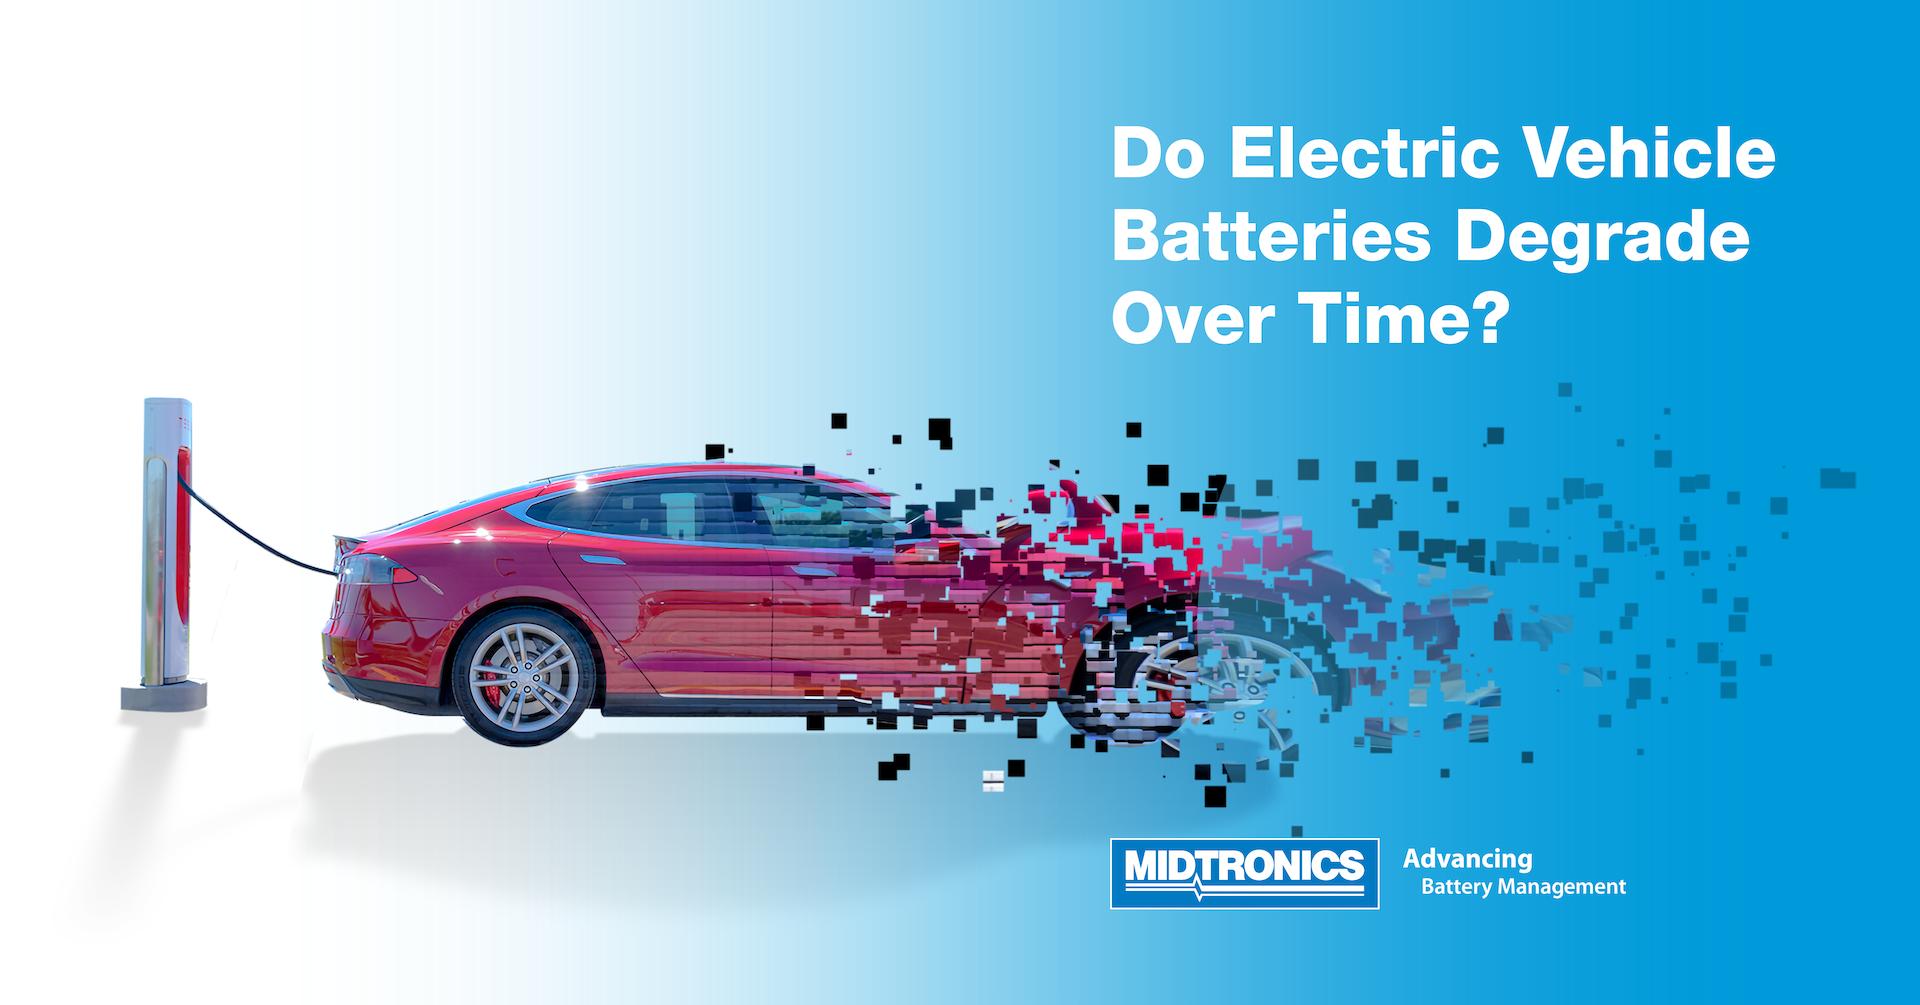 How Long Do Electric Car Batteries Last?